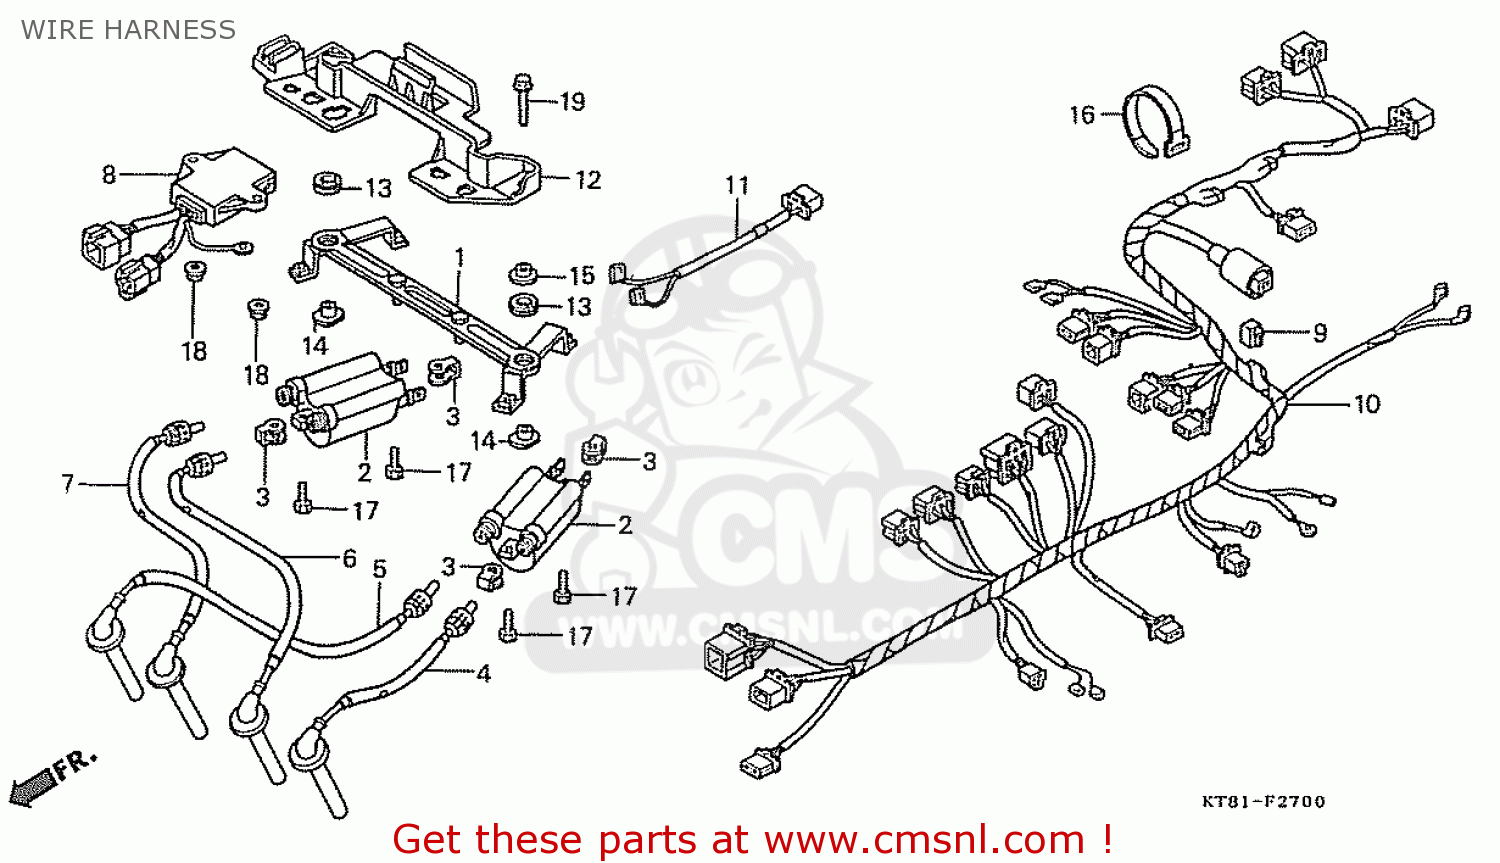 Honda cbr400rr parts list #5